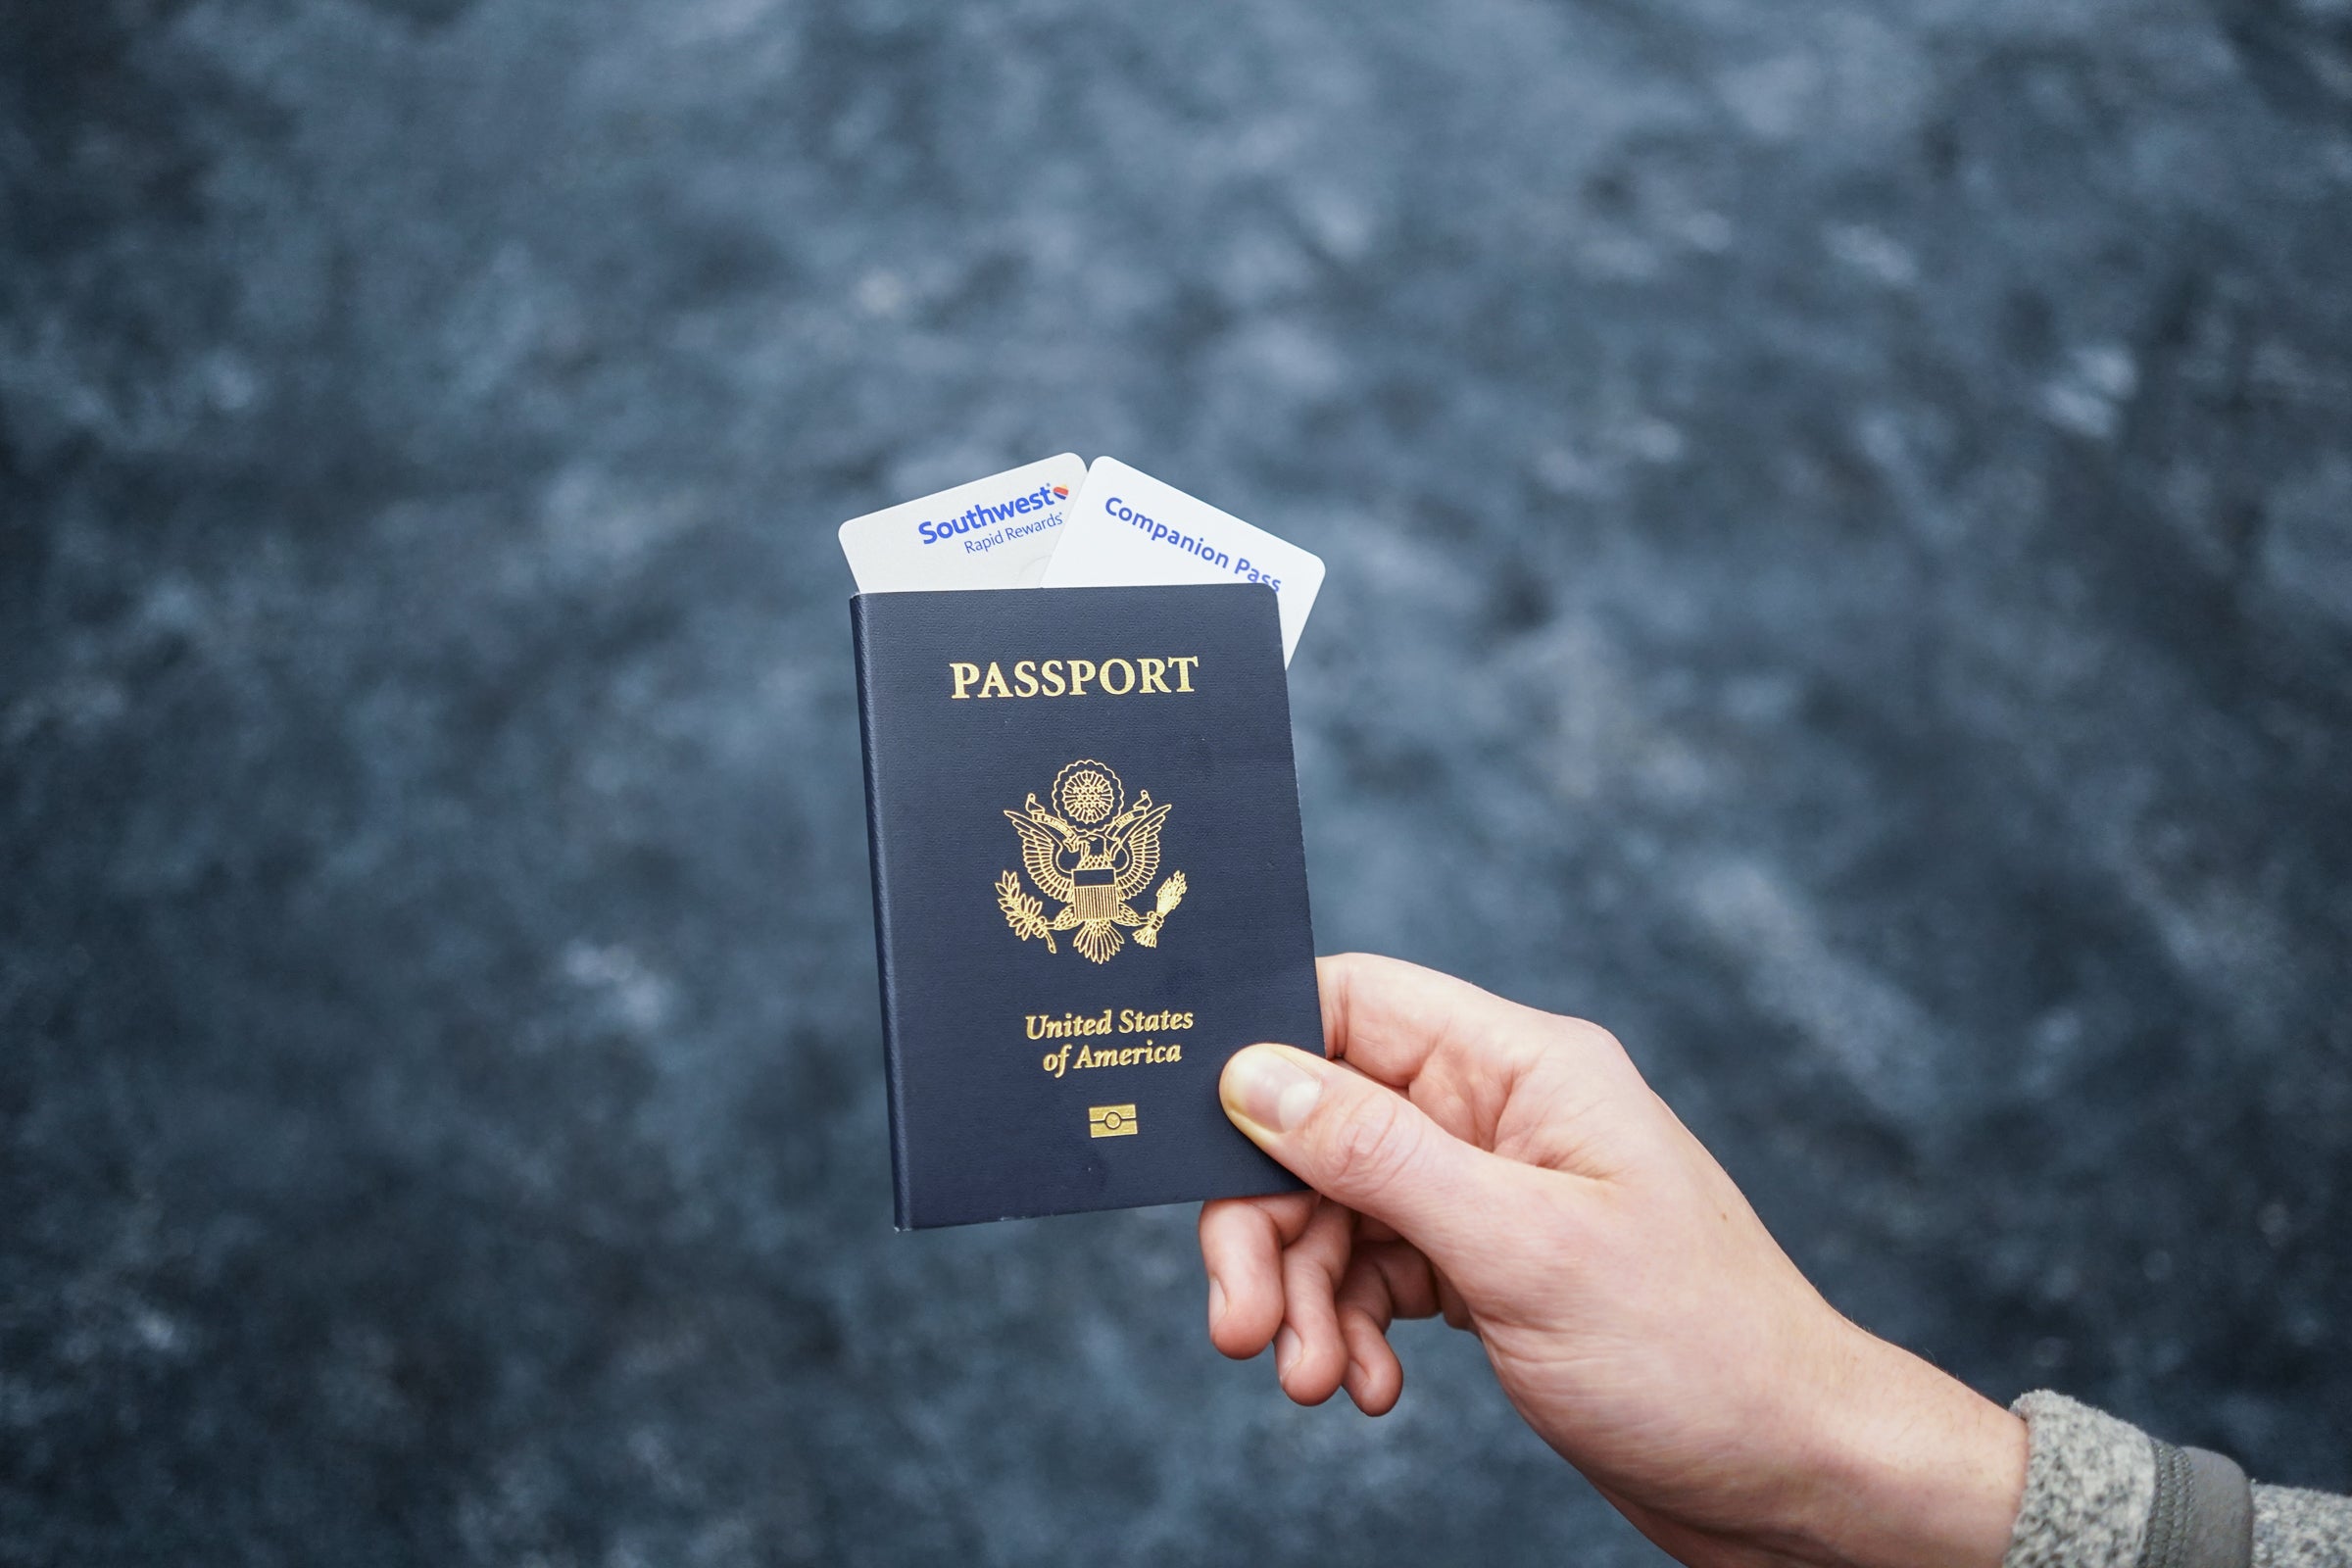 Southwest Companion Pass and a U.S. passport